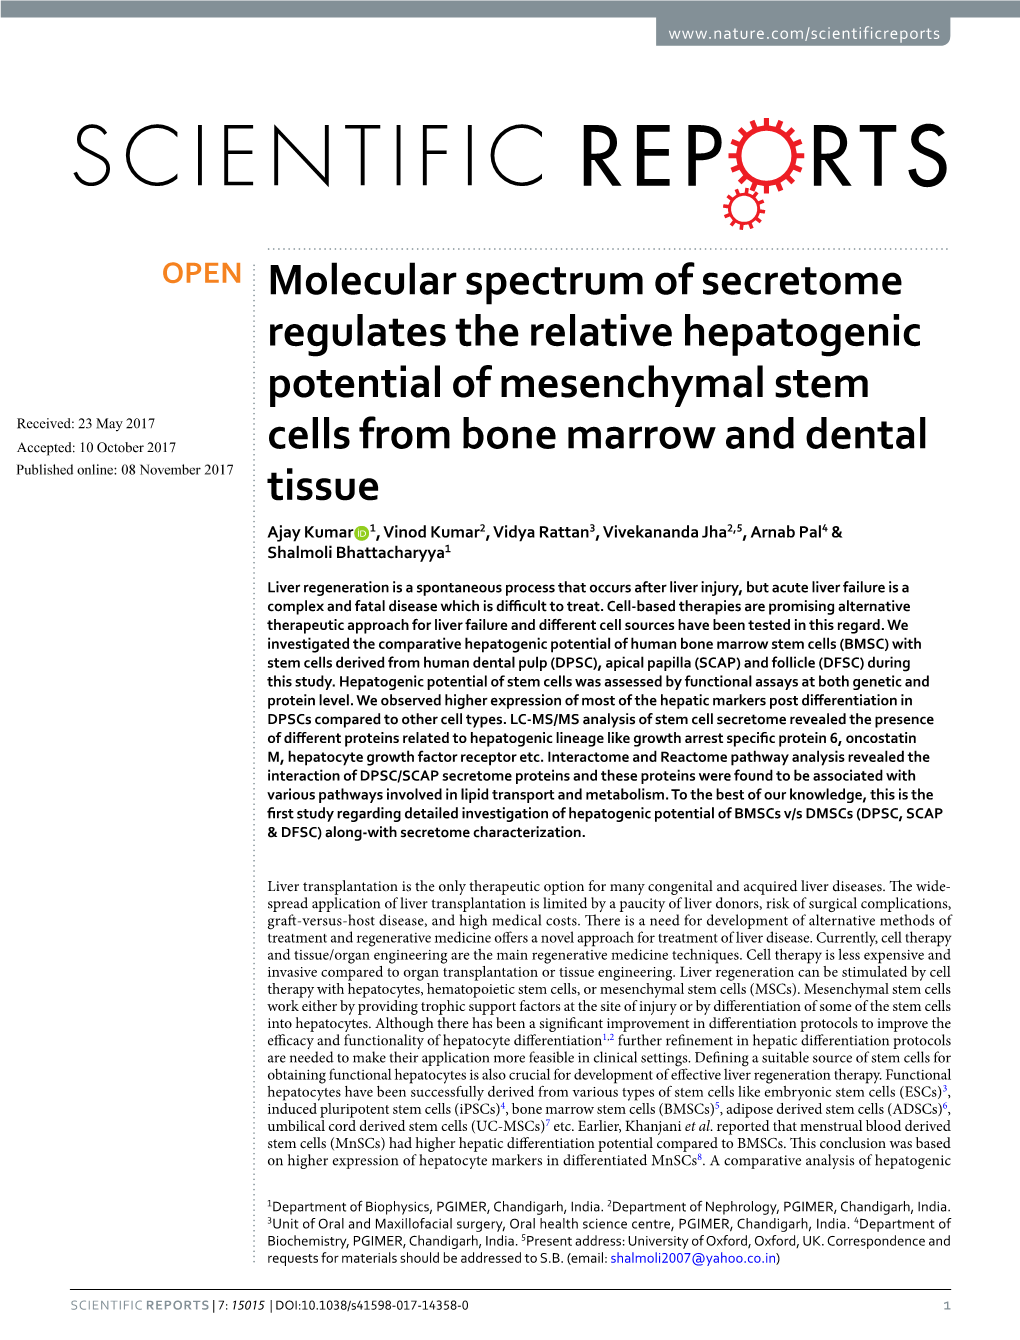 Molecular Spectrum of Secretome Regulates the Relative Hepatogenic Potential of Mesenchymal Stem Cells from Bone Marrow and Dent